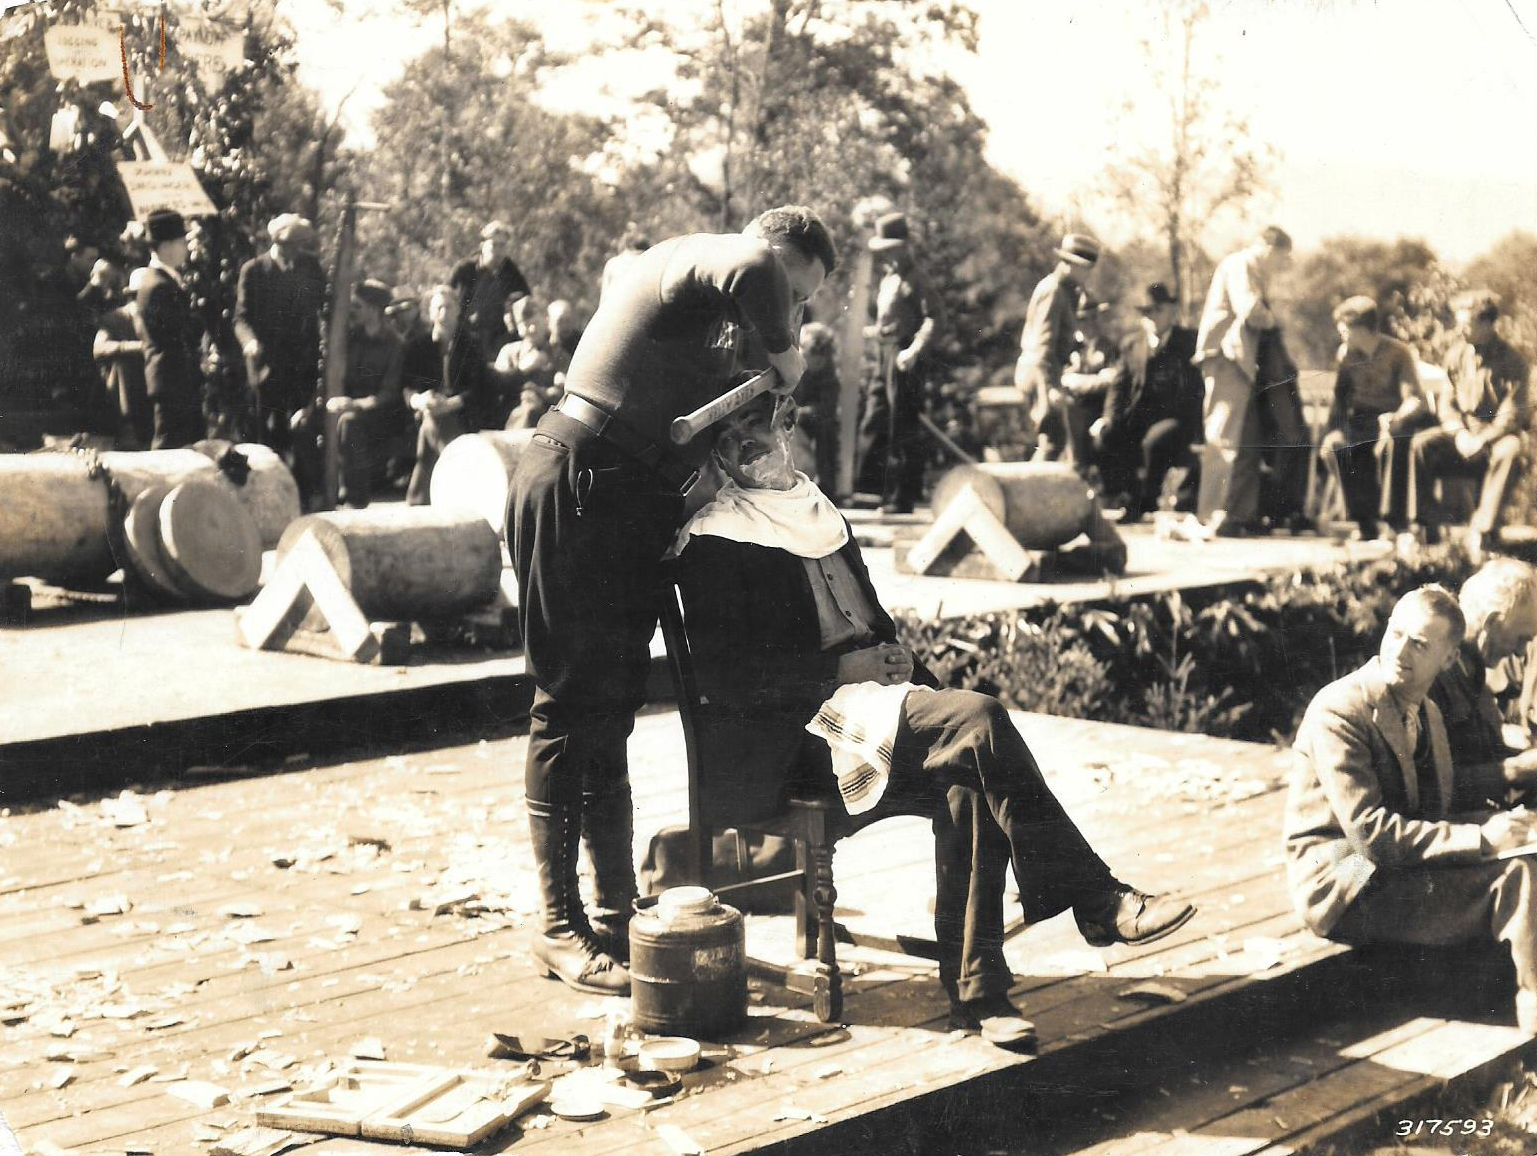 Civilian Conservation Corps Ax shaving demonstration - circa 1933